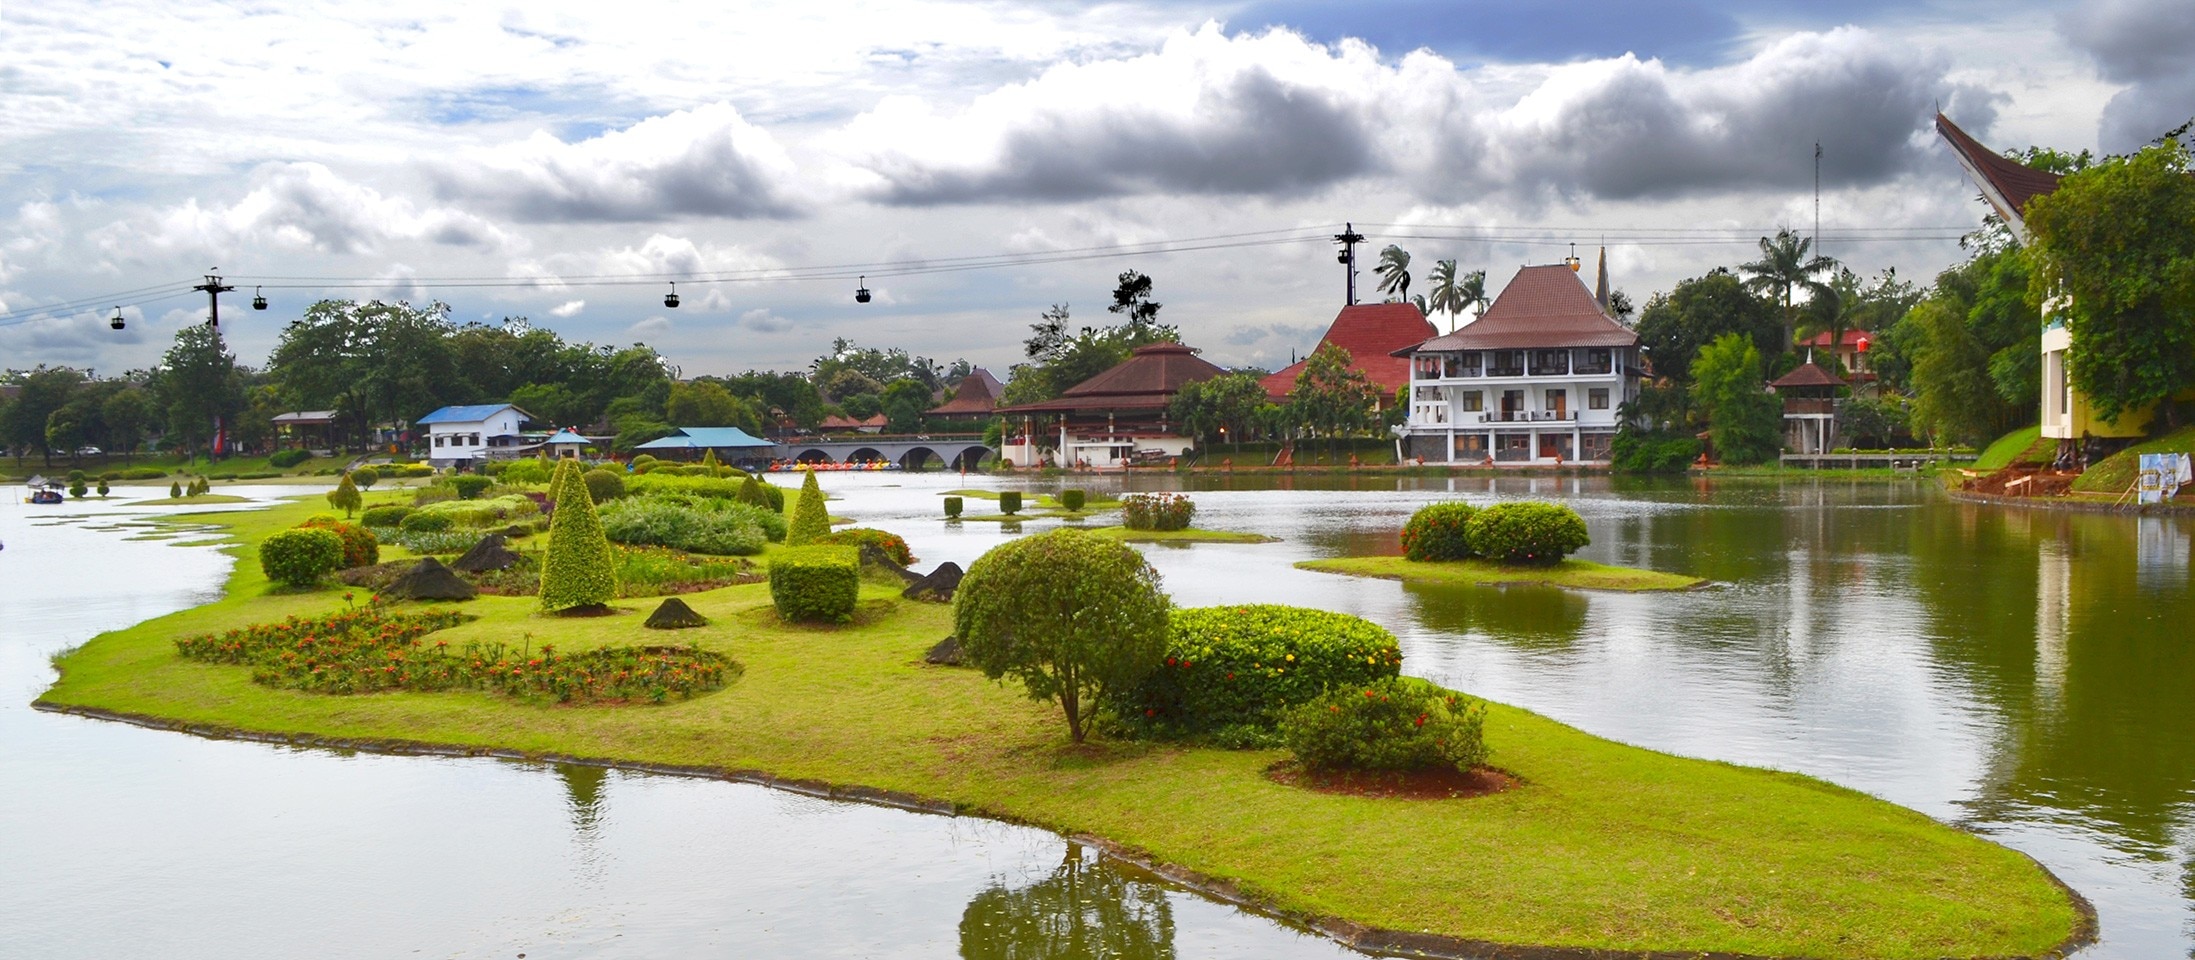 Taman Mini Indonesia Indah  （印尼美丽小公园）